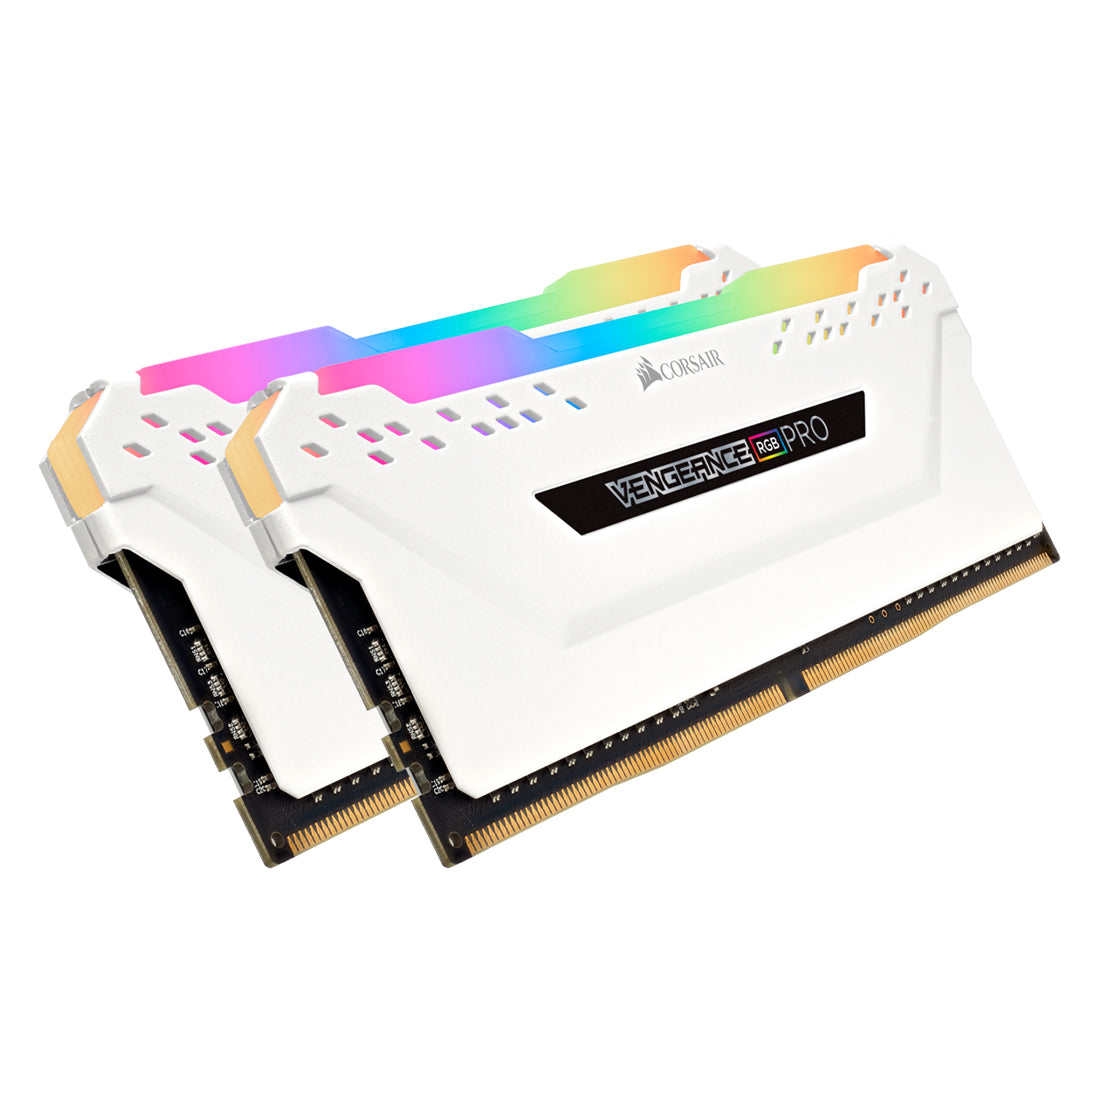 Corsair Vengeance RGB Pro 32GB (2x16GB) DDR4 RAM 3000MHz डेस्कटॉप मेमोरी